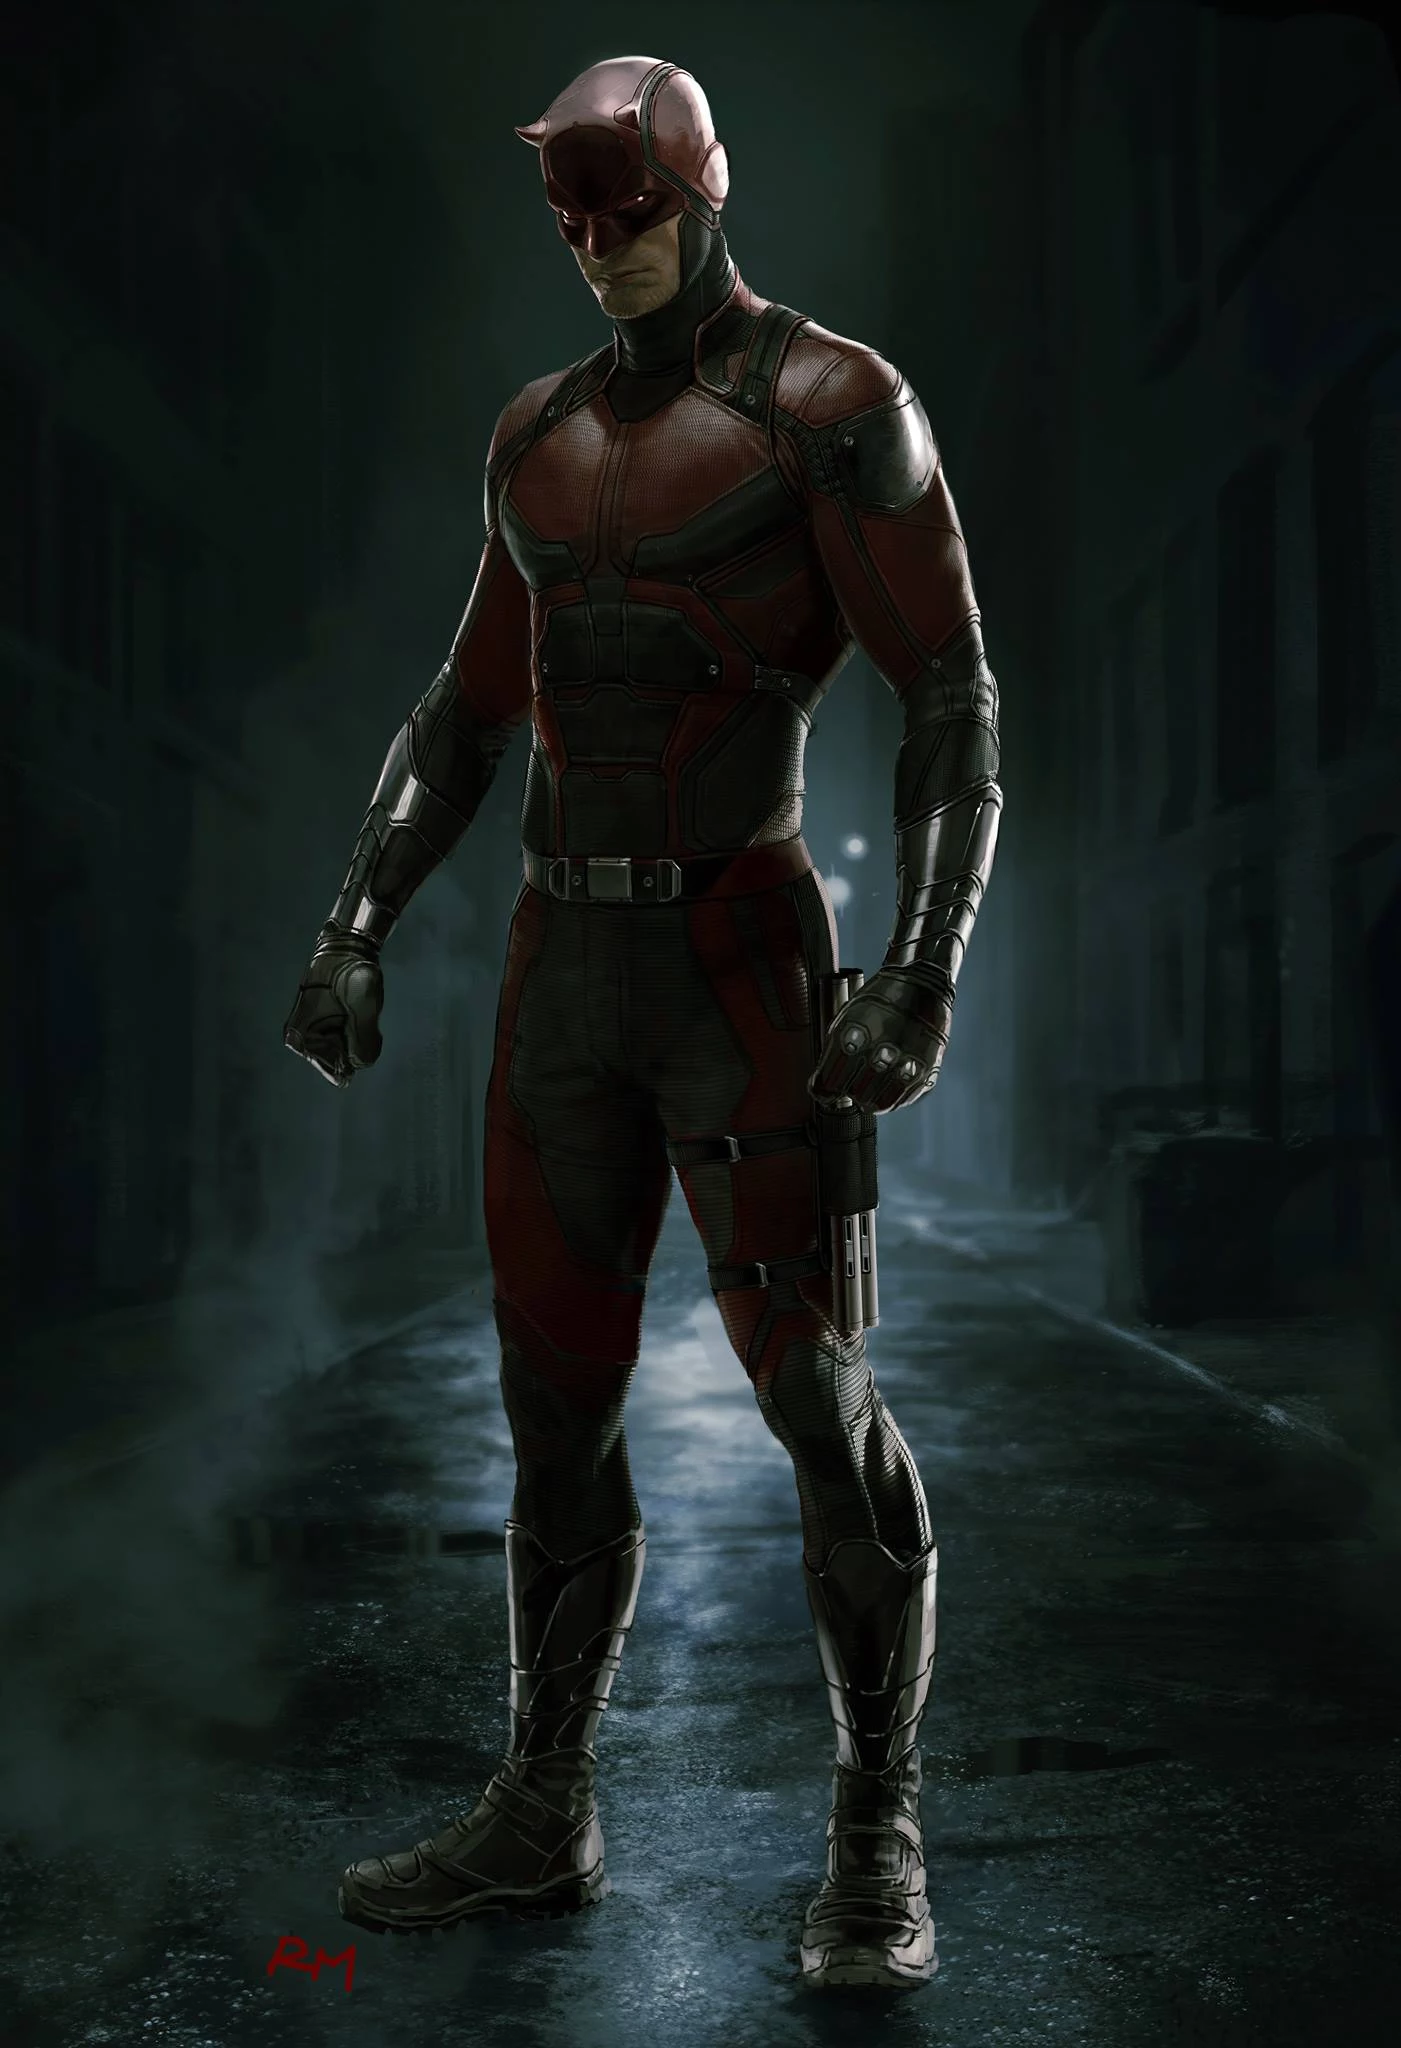 Daredevil' Costume Concept Art Was Much Closer to Comics